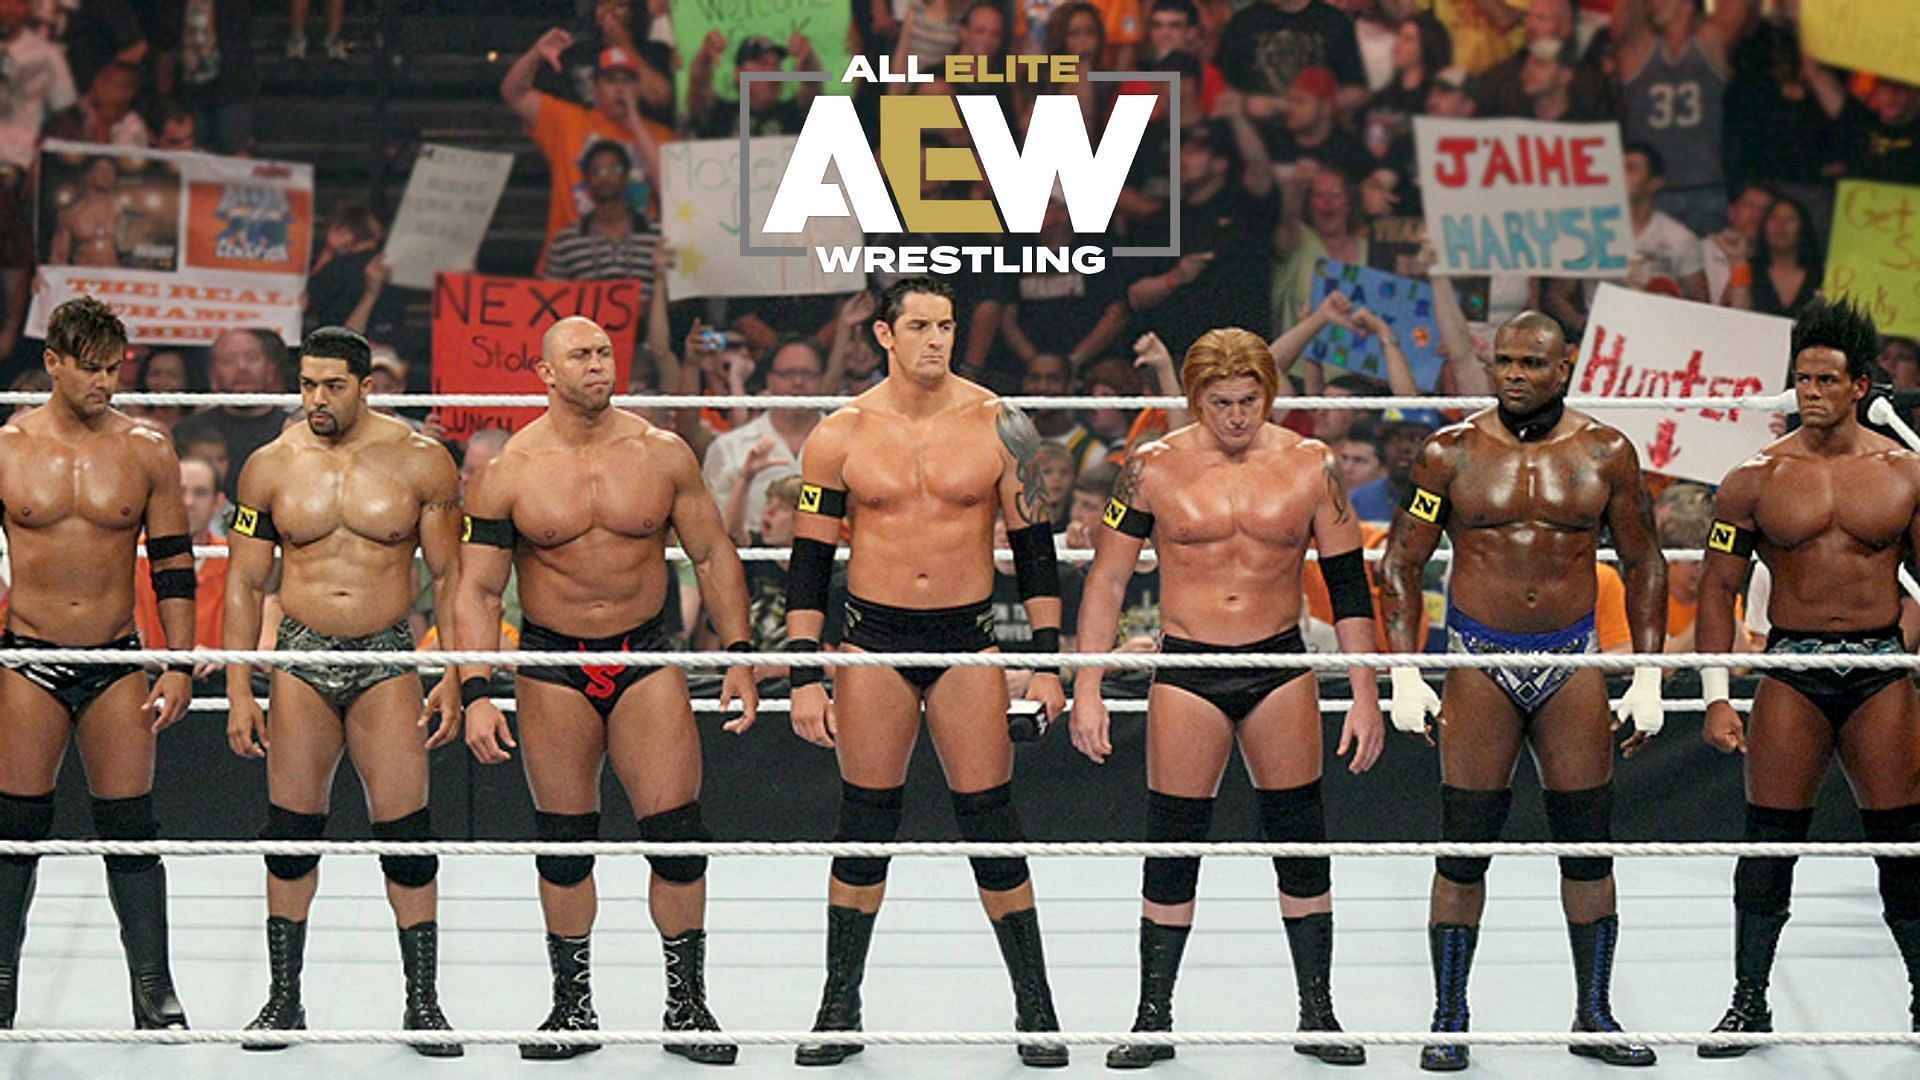 The Nexus took WWE by storm in 2010s